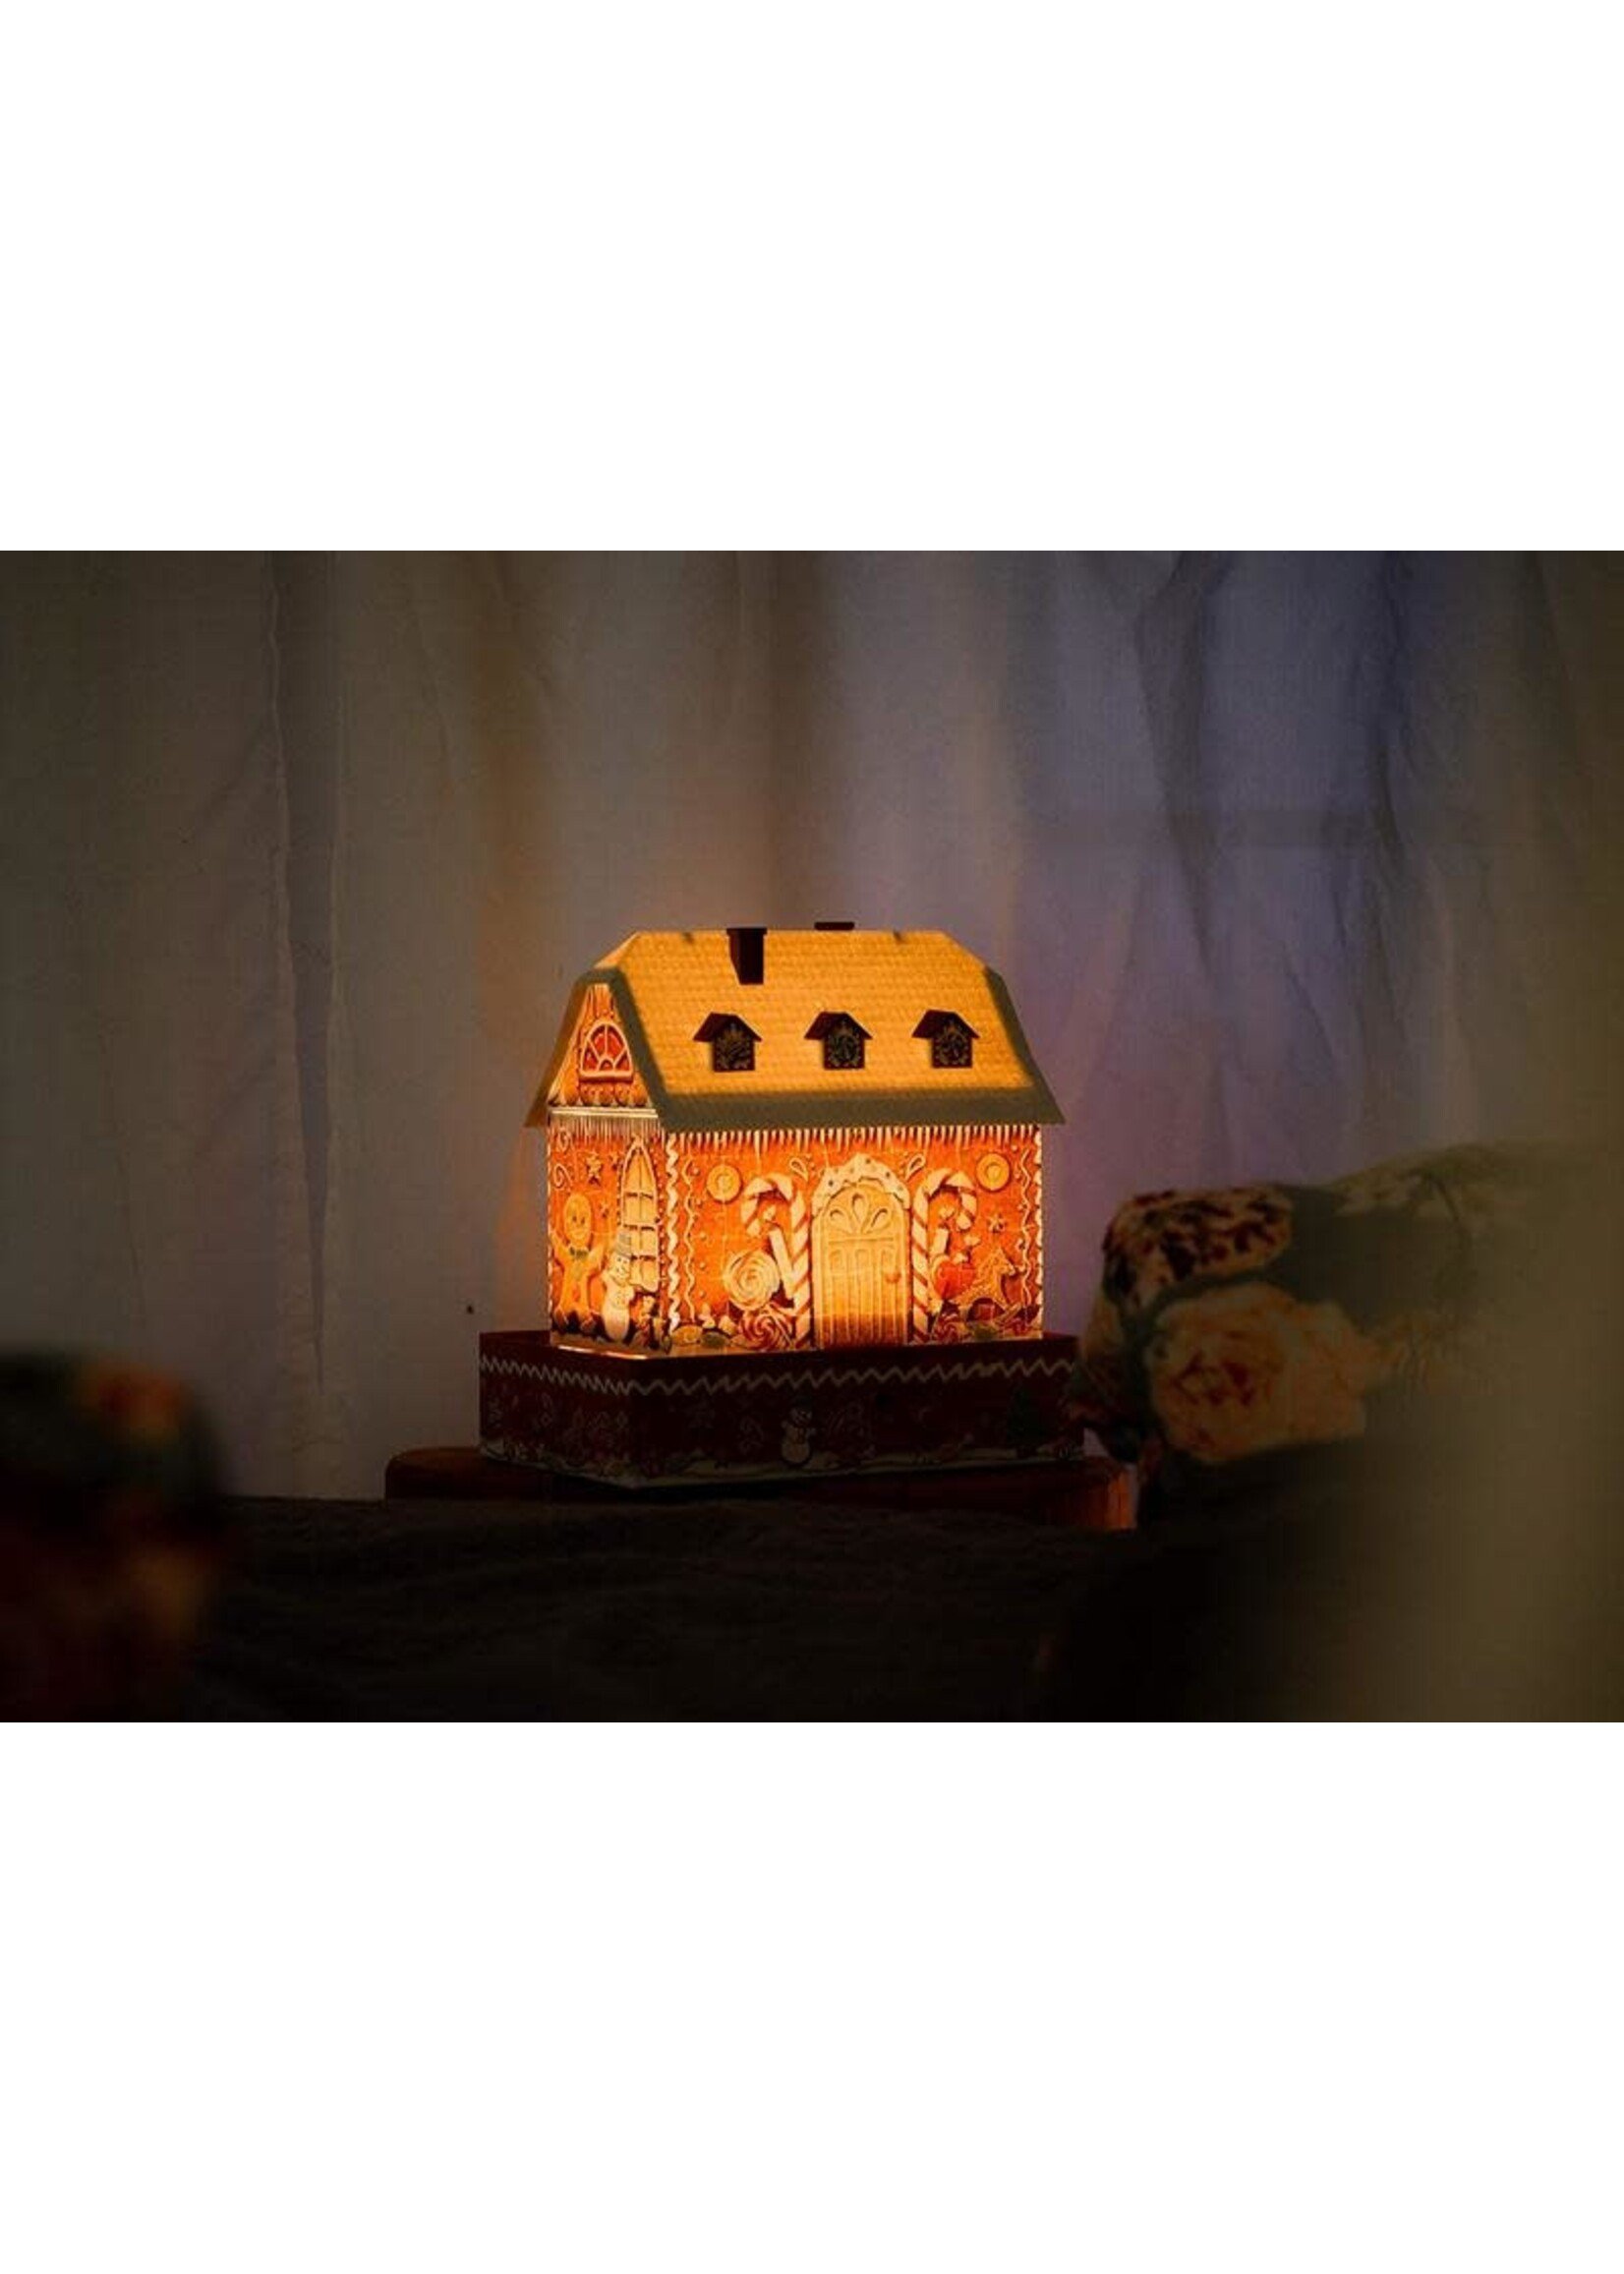 Ravensburger Gingerbread House -Night Ed 3D